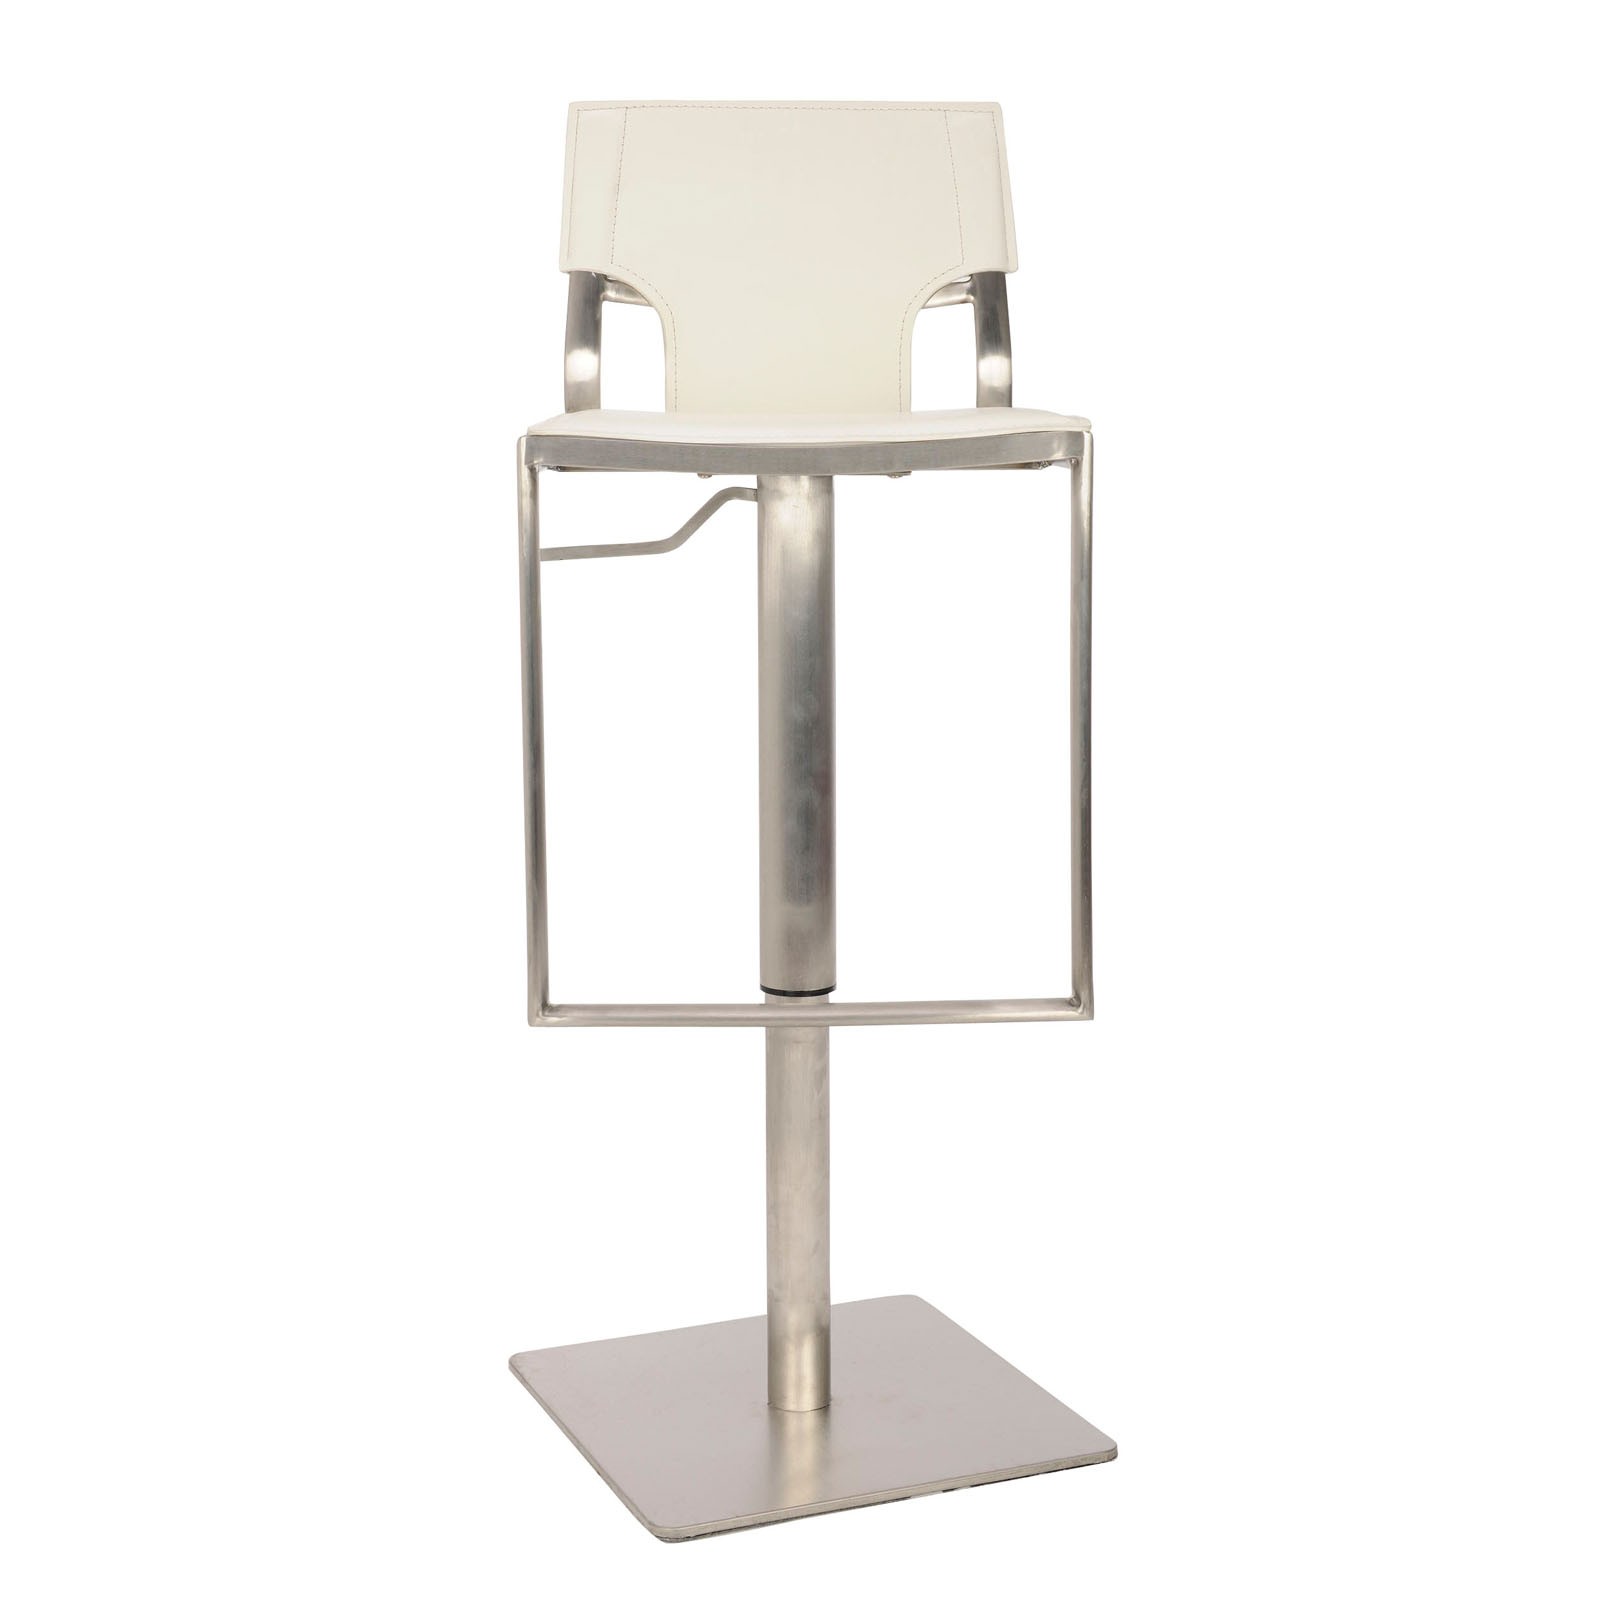 Safavieh liam stainless steel adjustable bar stool white